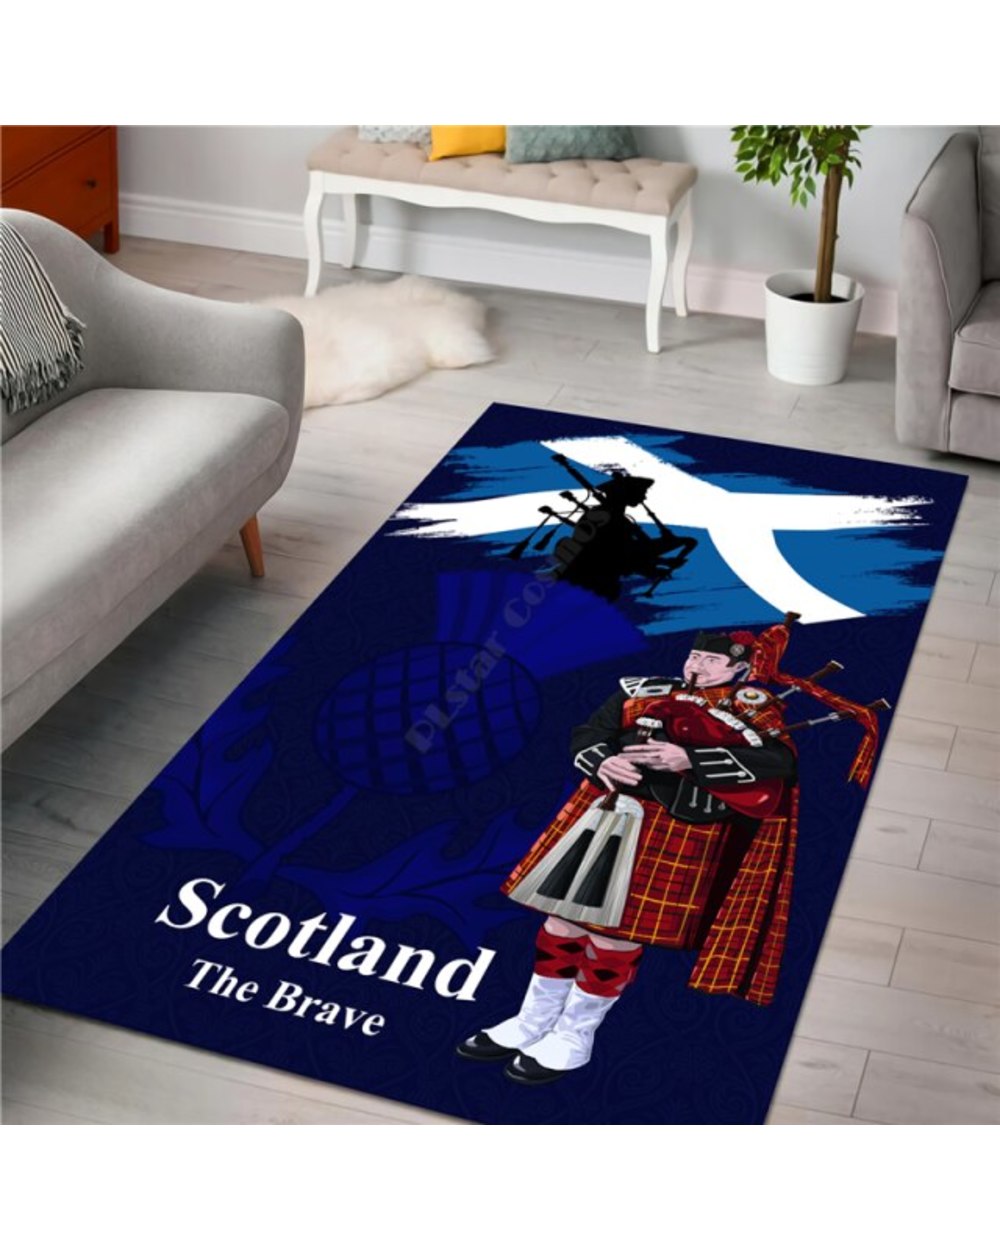 Scotland the brave man rug 5